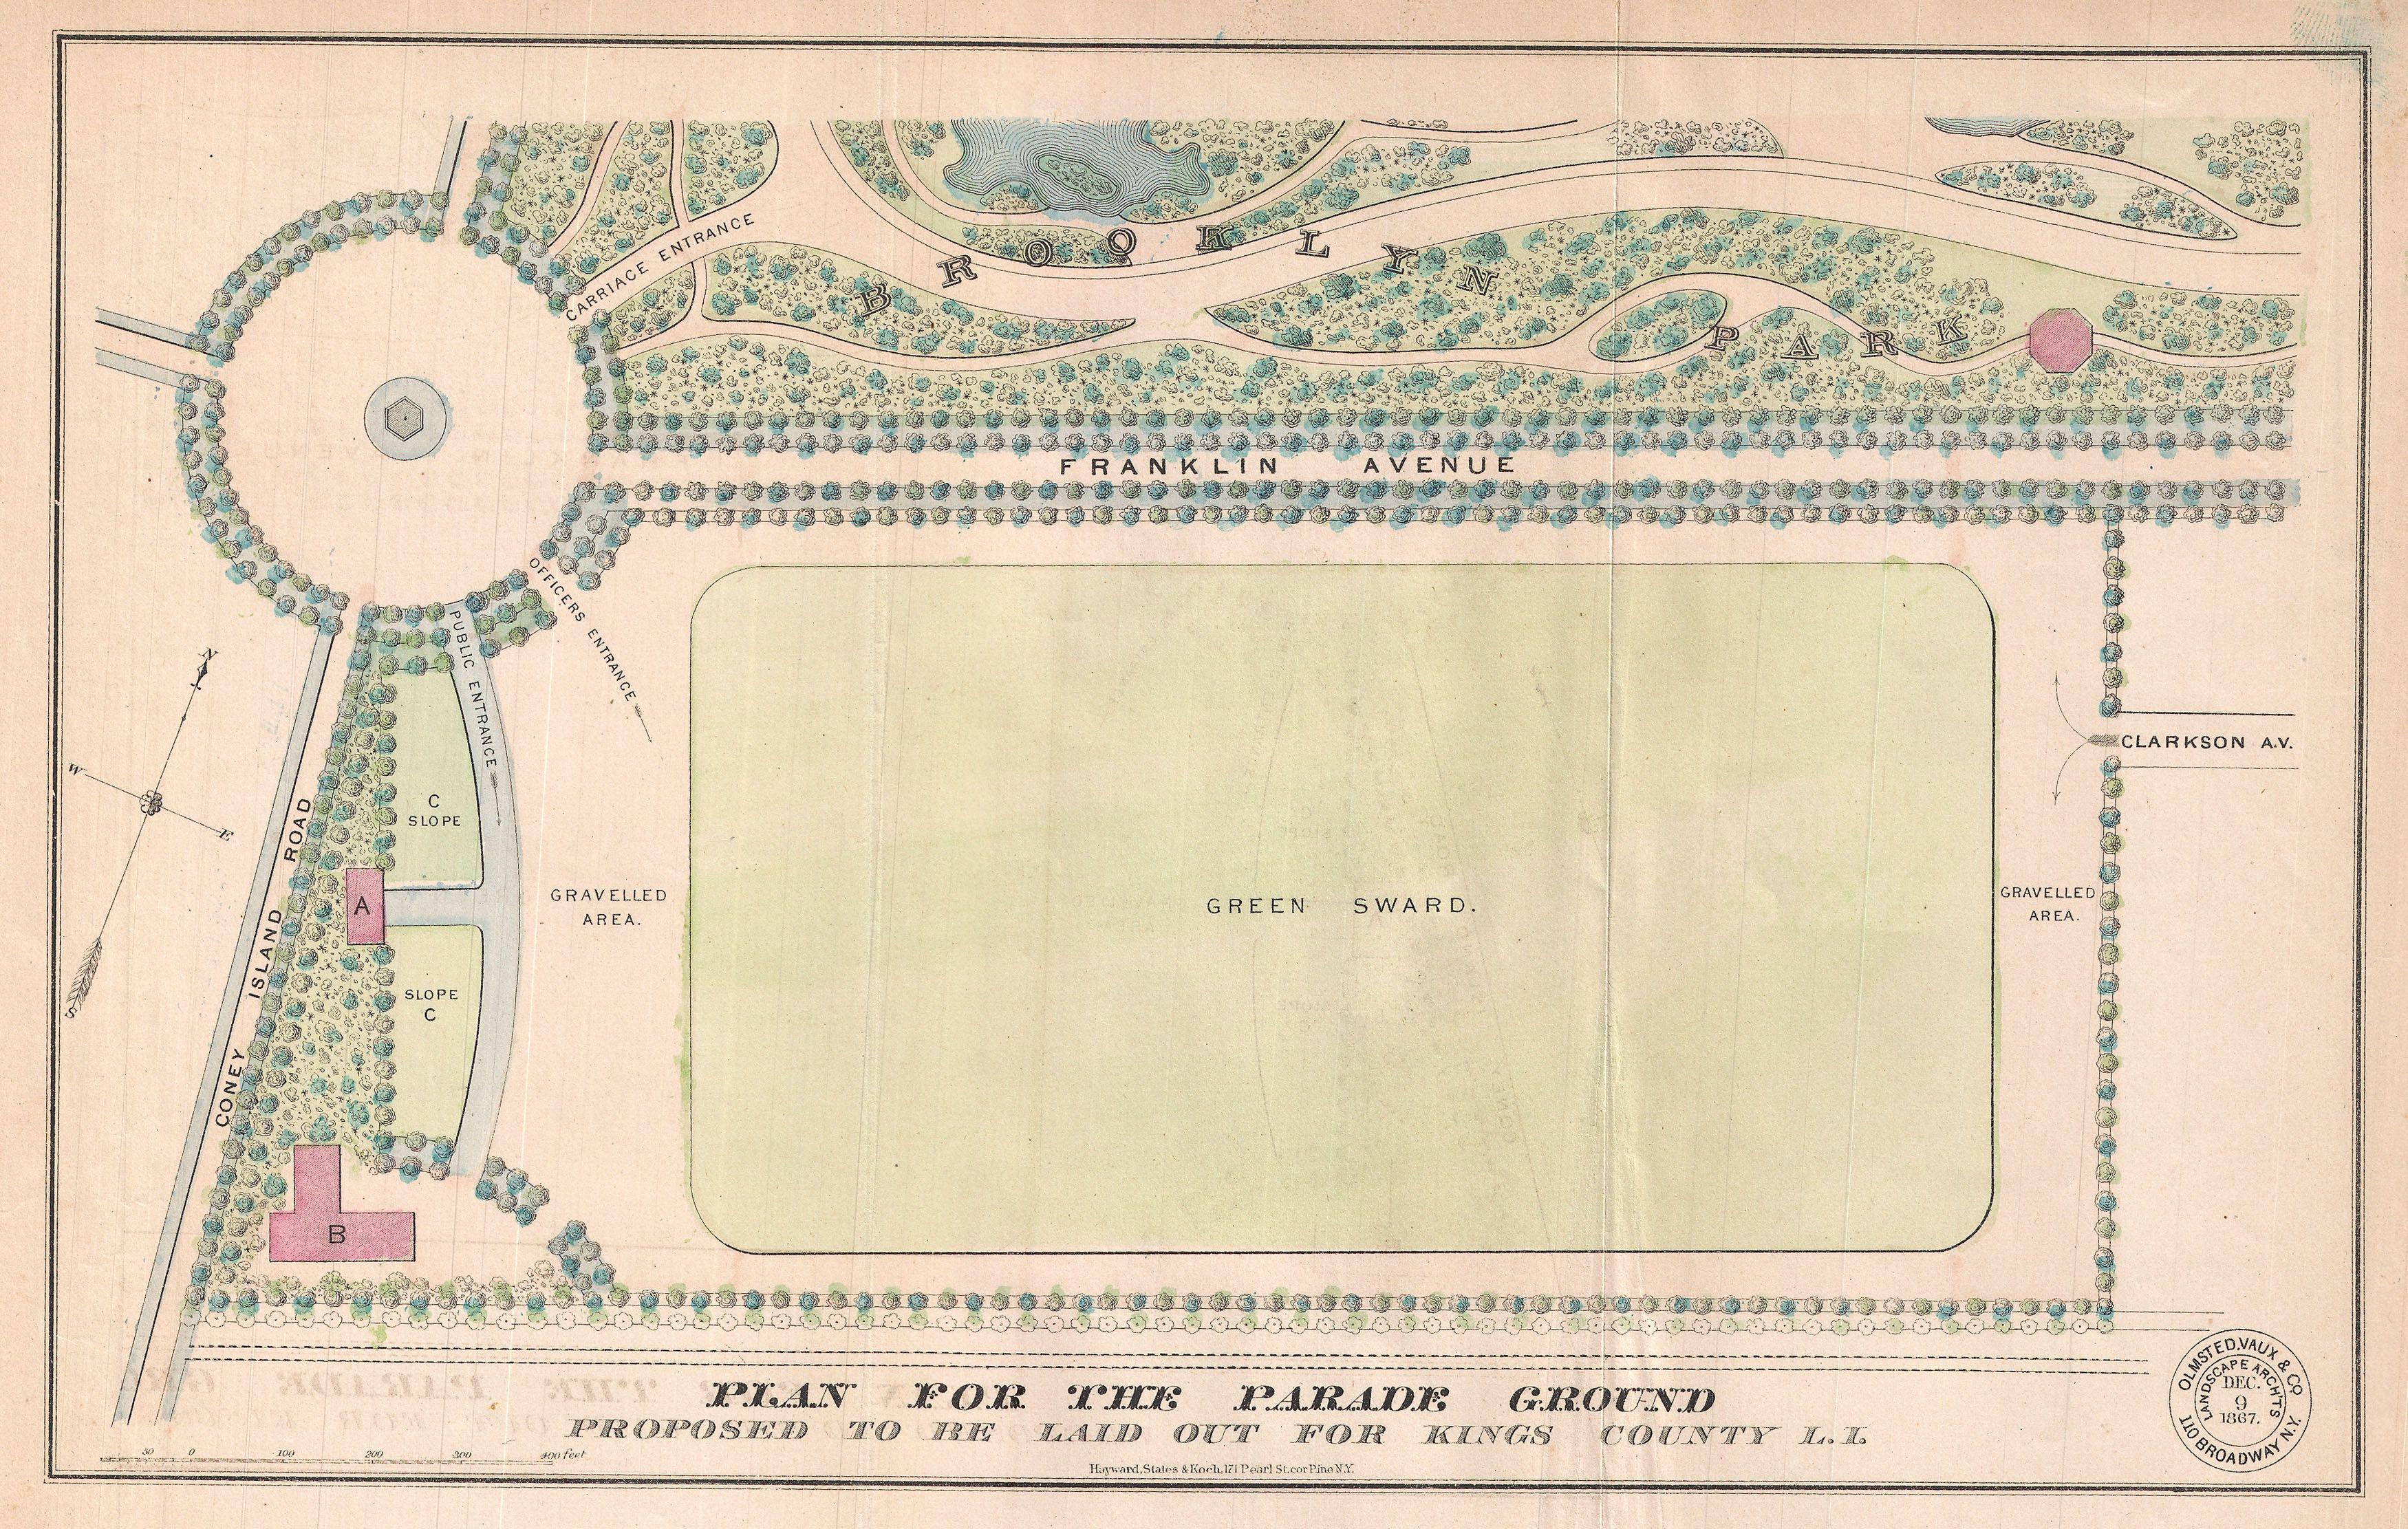 1868 map of Prospect Park Parade Ground